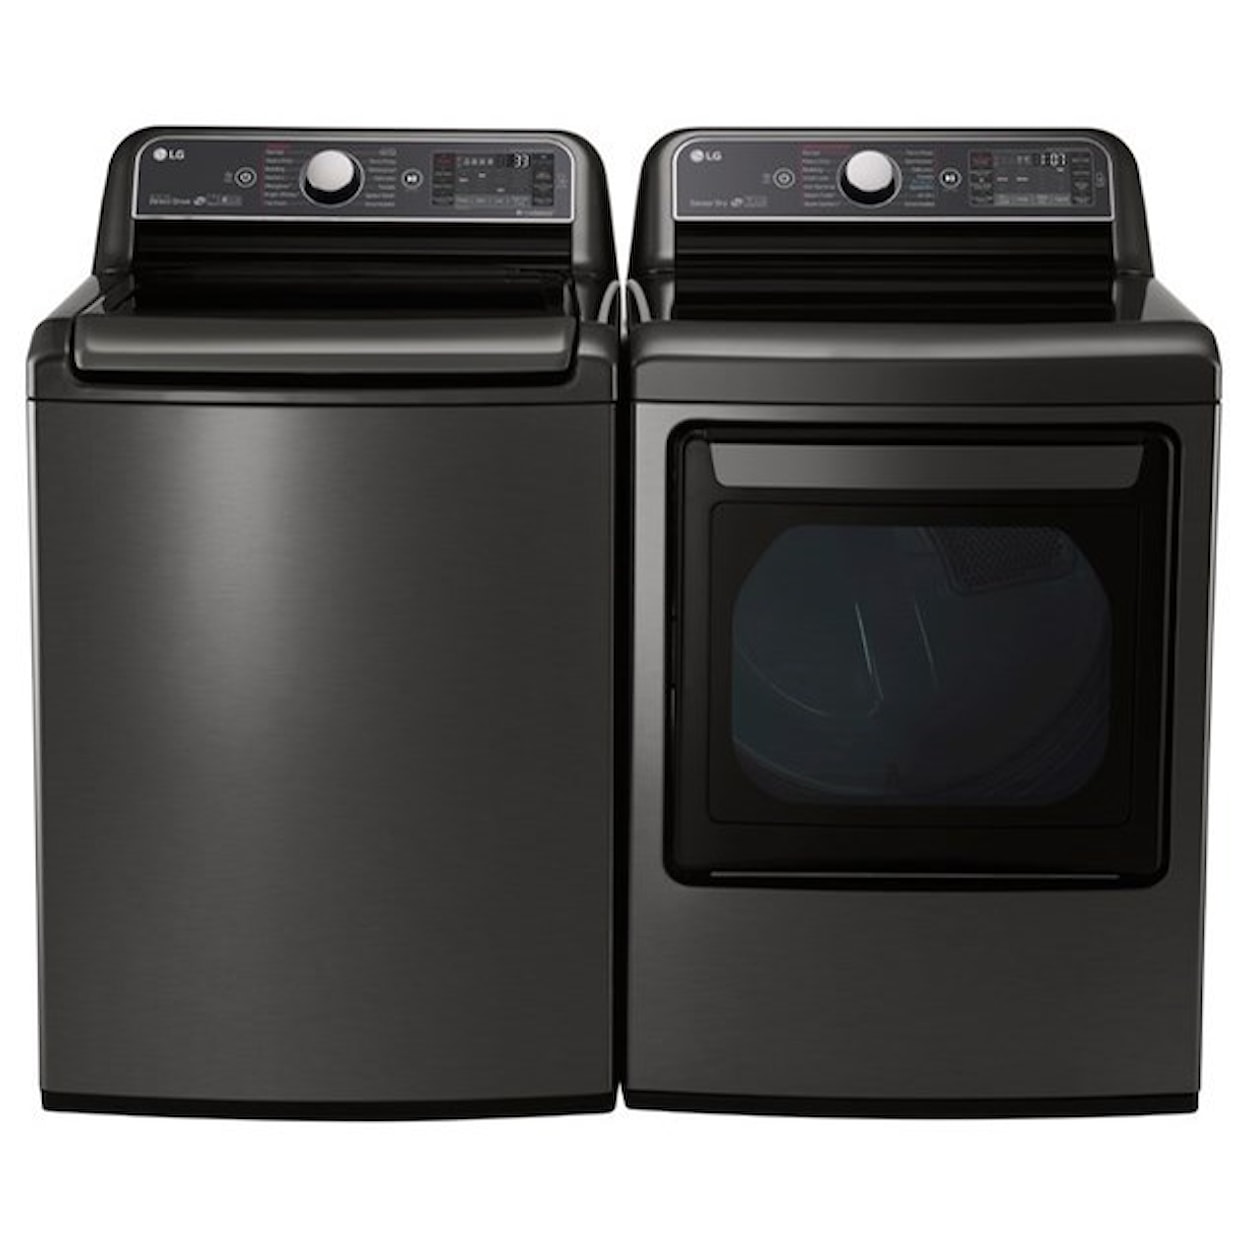 LG Appliances Washers 5.2 Cu. Ft. Mega Capacity Top Load Washer